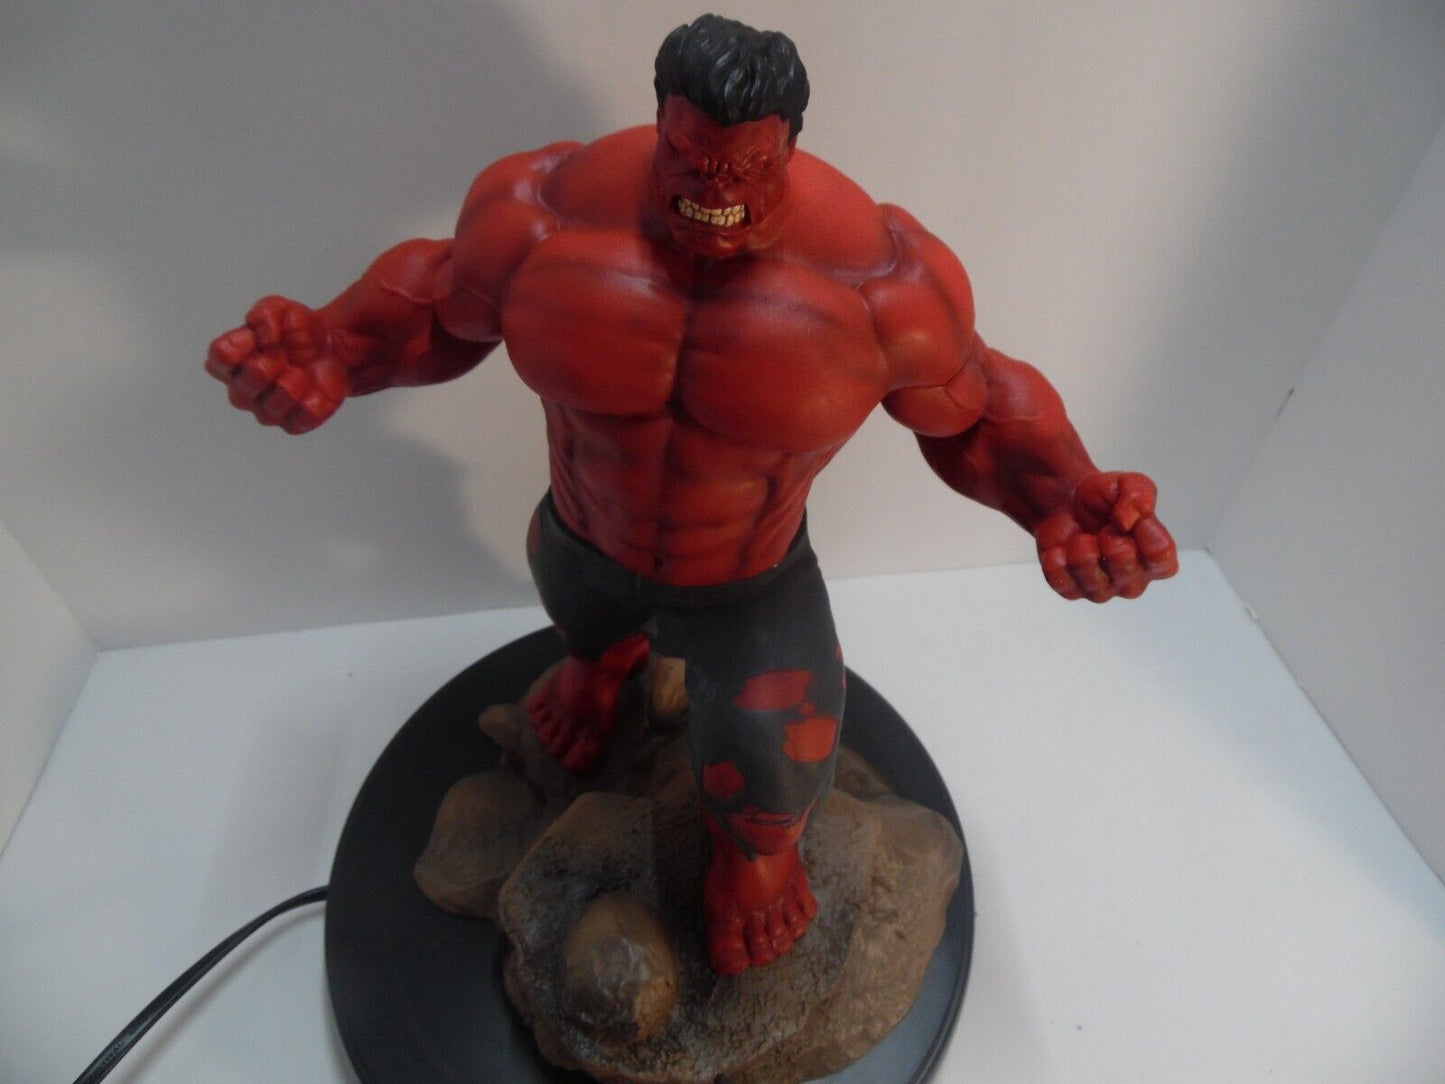 Red Hulk Marvel Gallery Diorama Diamond Select PVC Statue